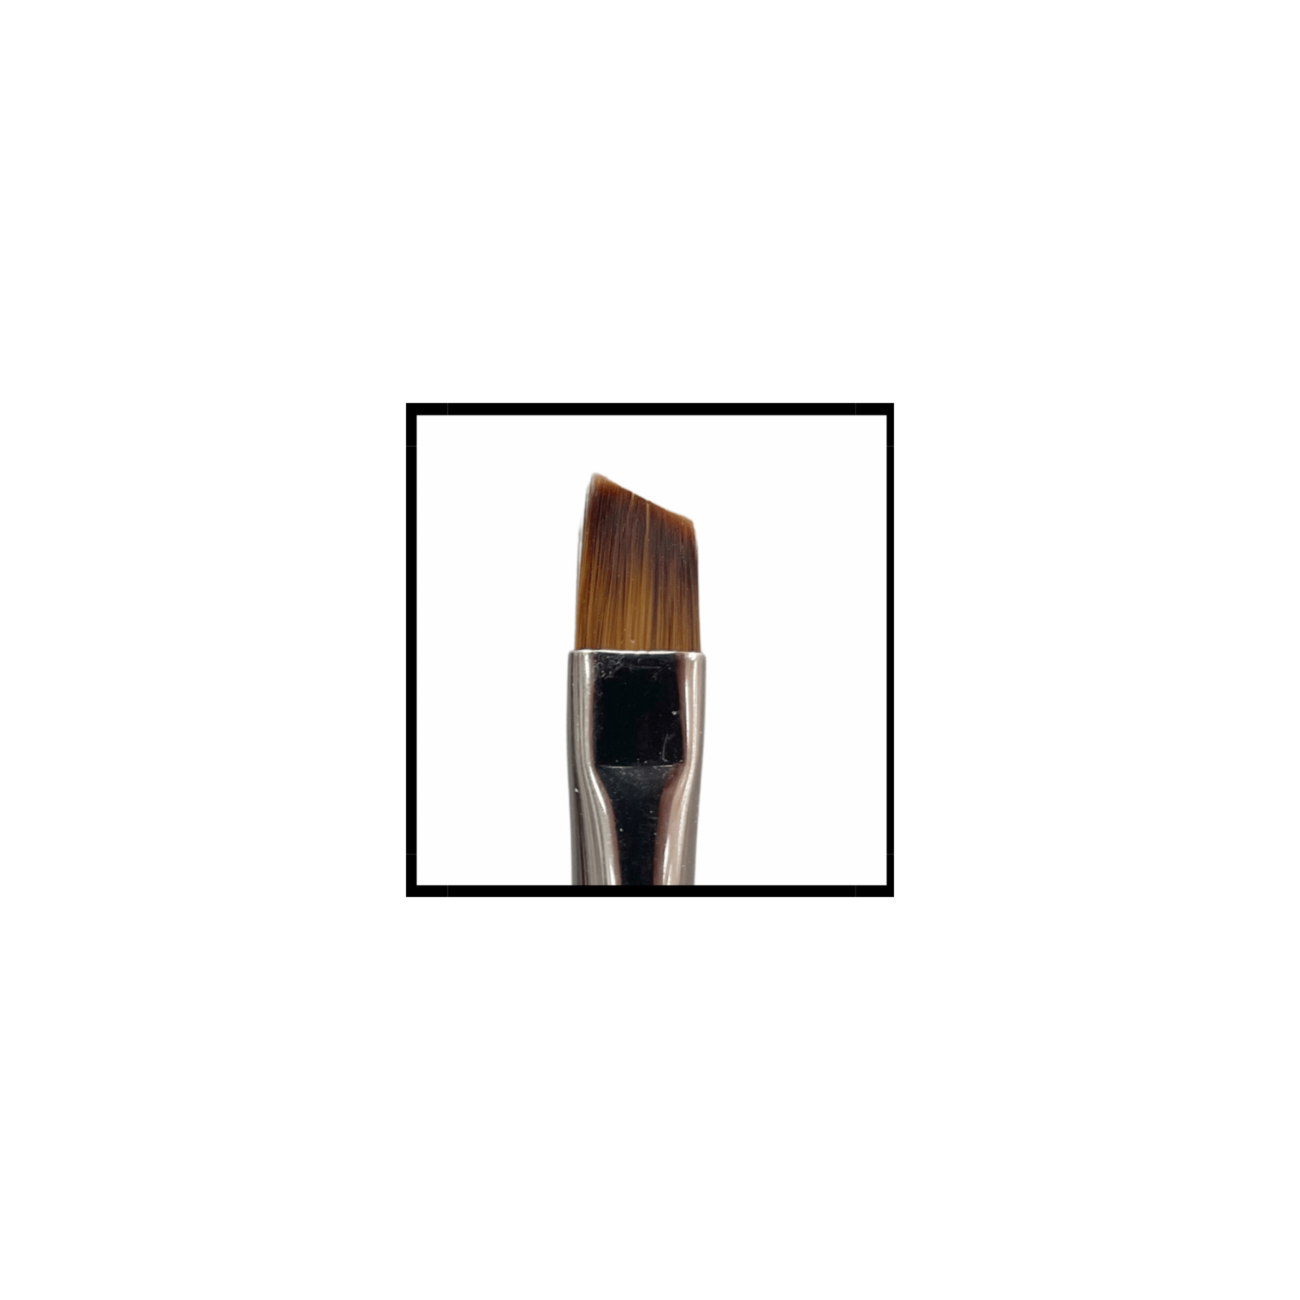 InLei ® Michelangelo | Professional Angled Brush